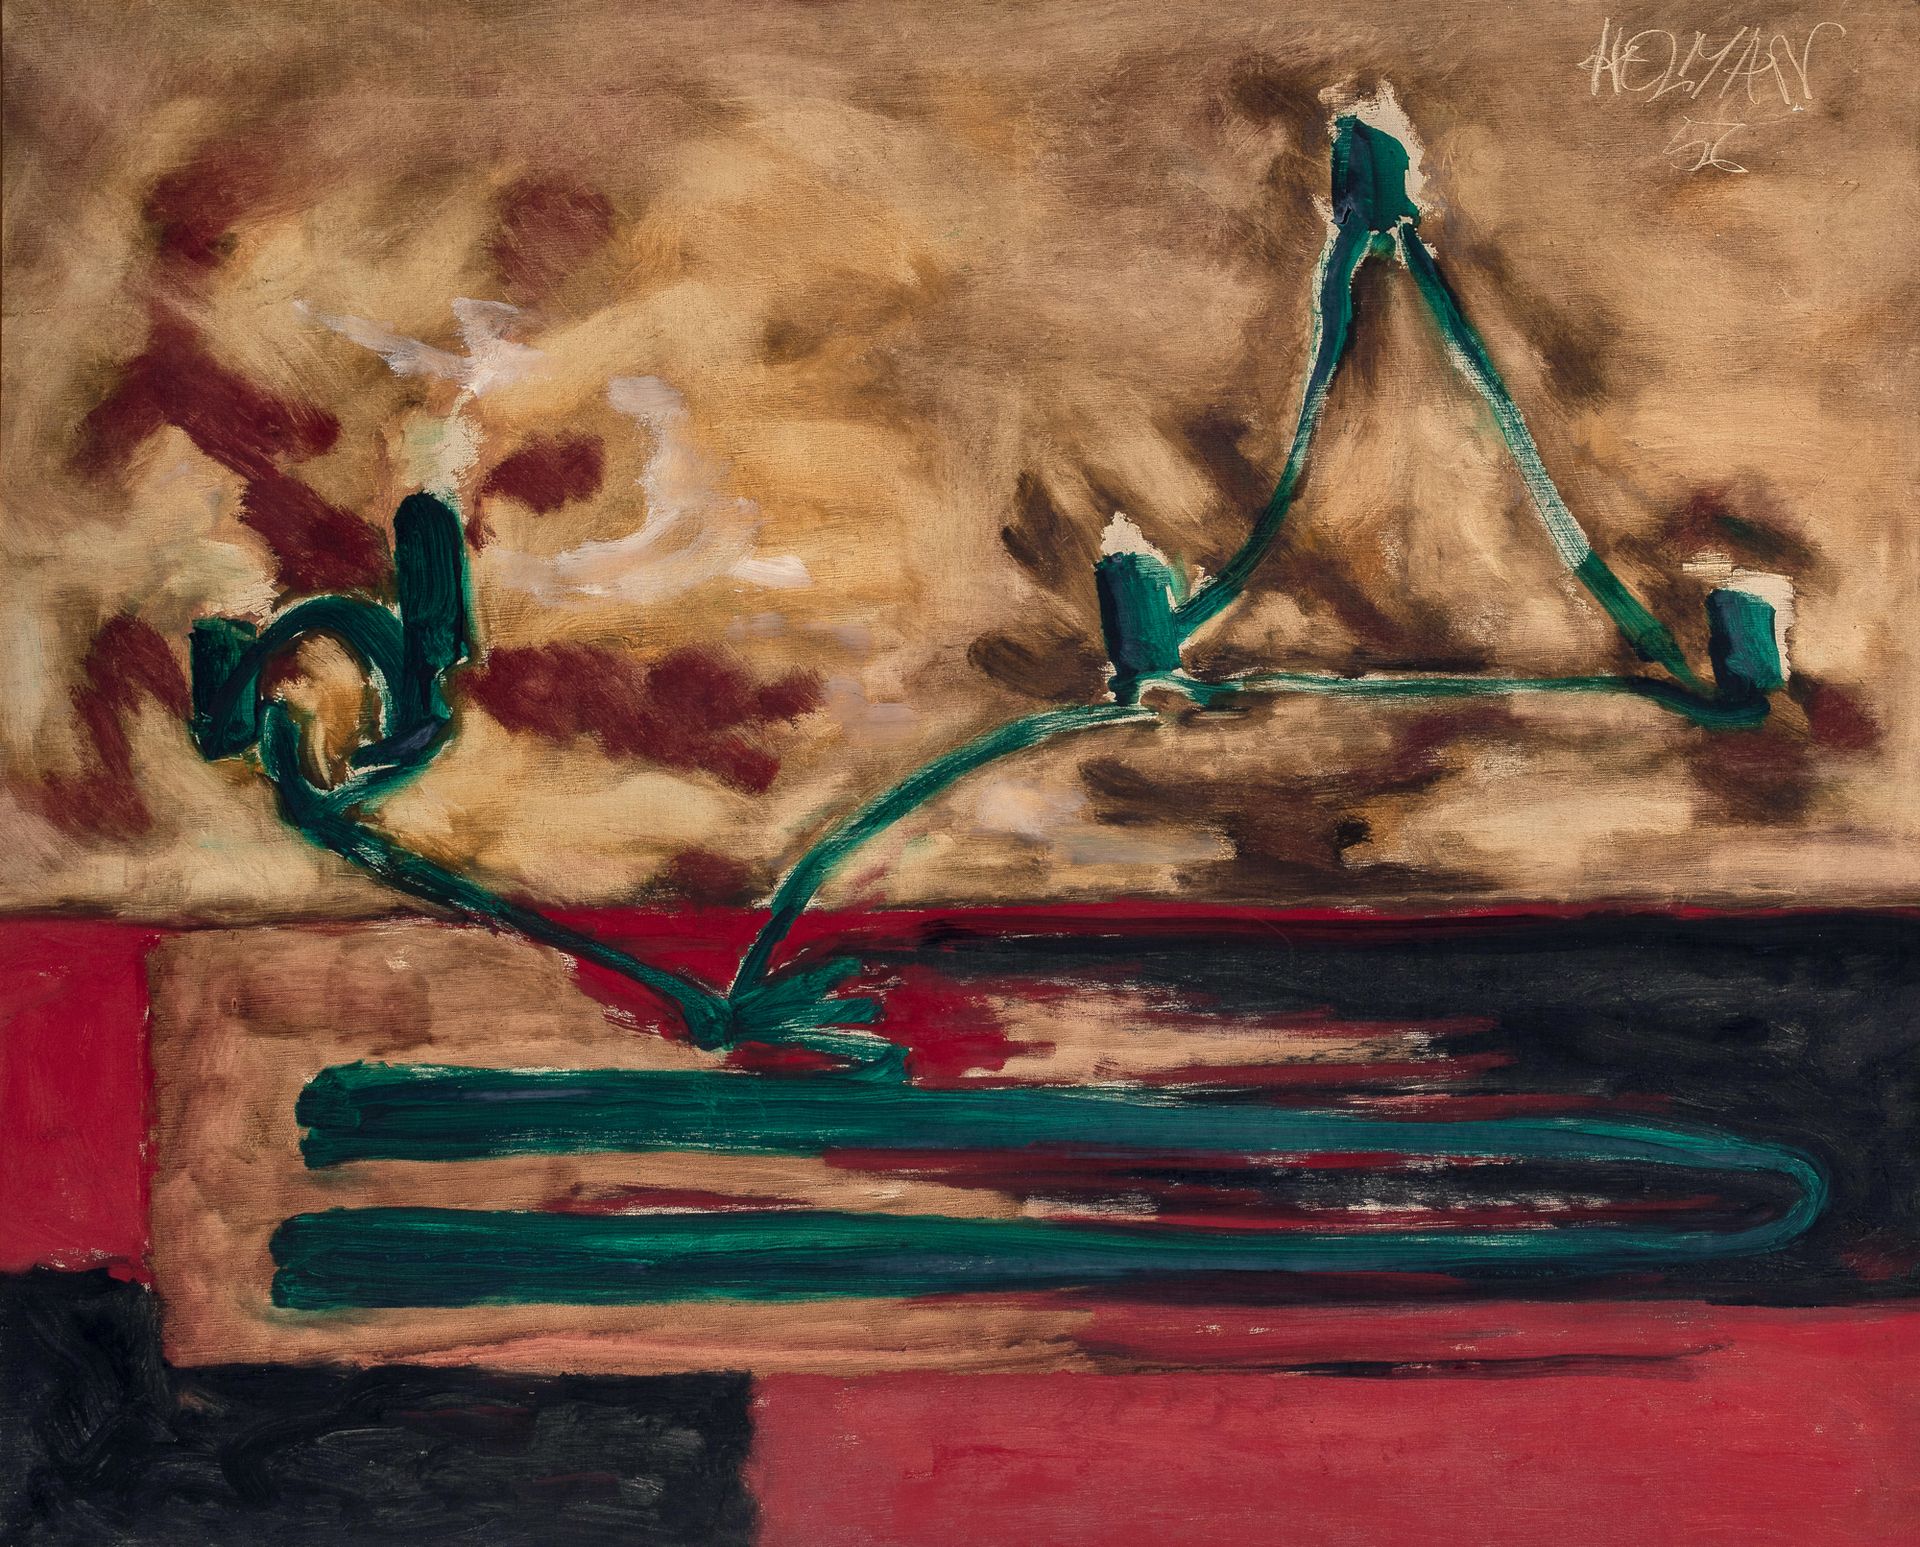 ROBERT HELMAN (1910-1990) - Composición, 1956
Óleo sobre lienzo, firmado arriba &hellip;